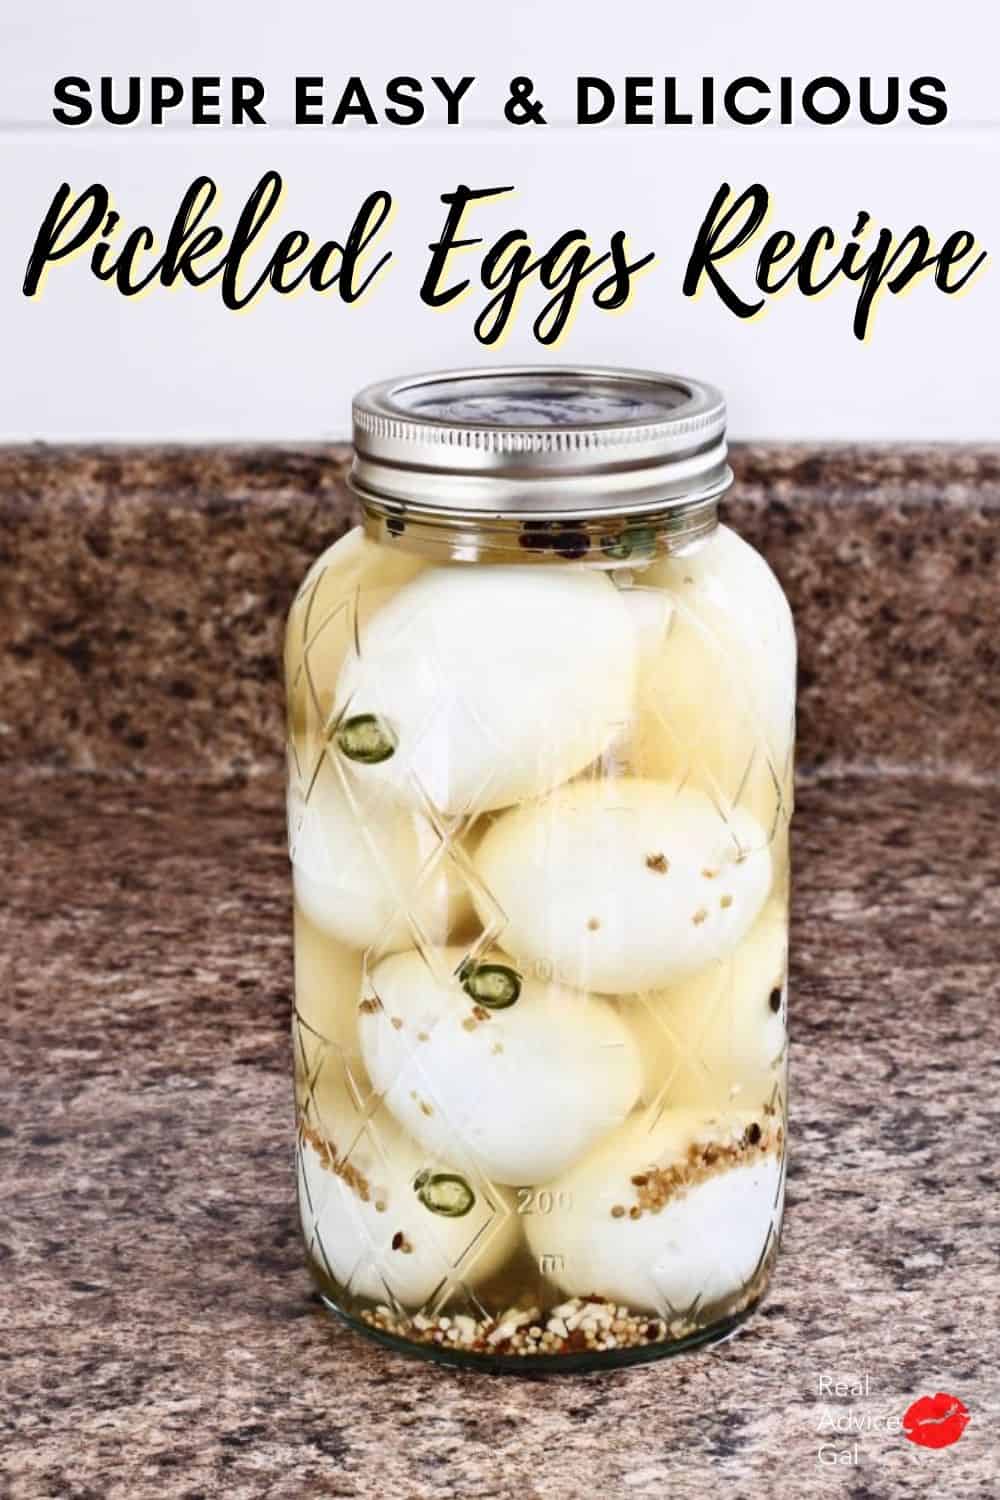 Pickled eggs recipe